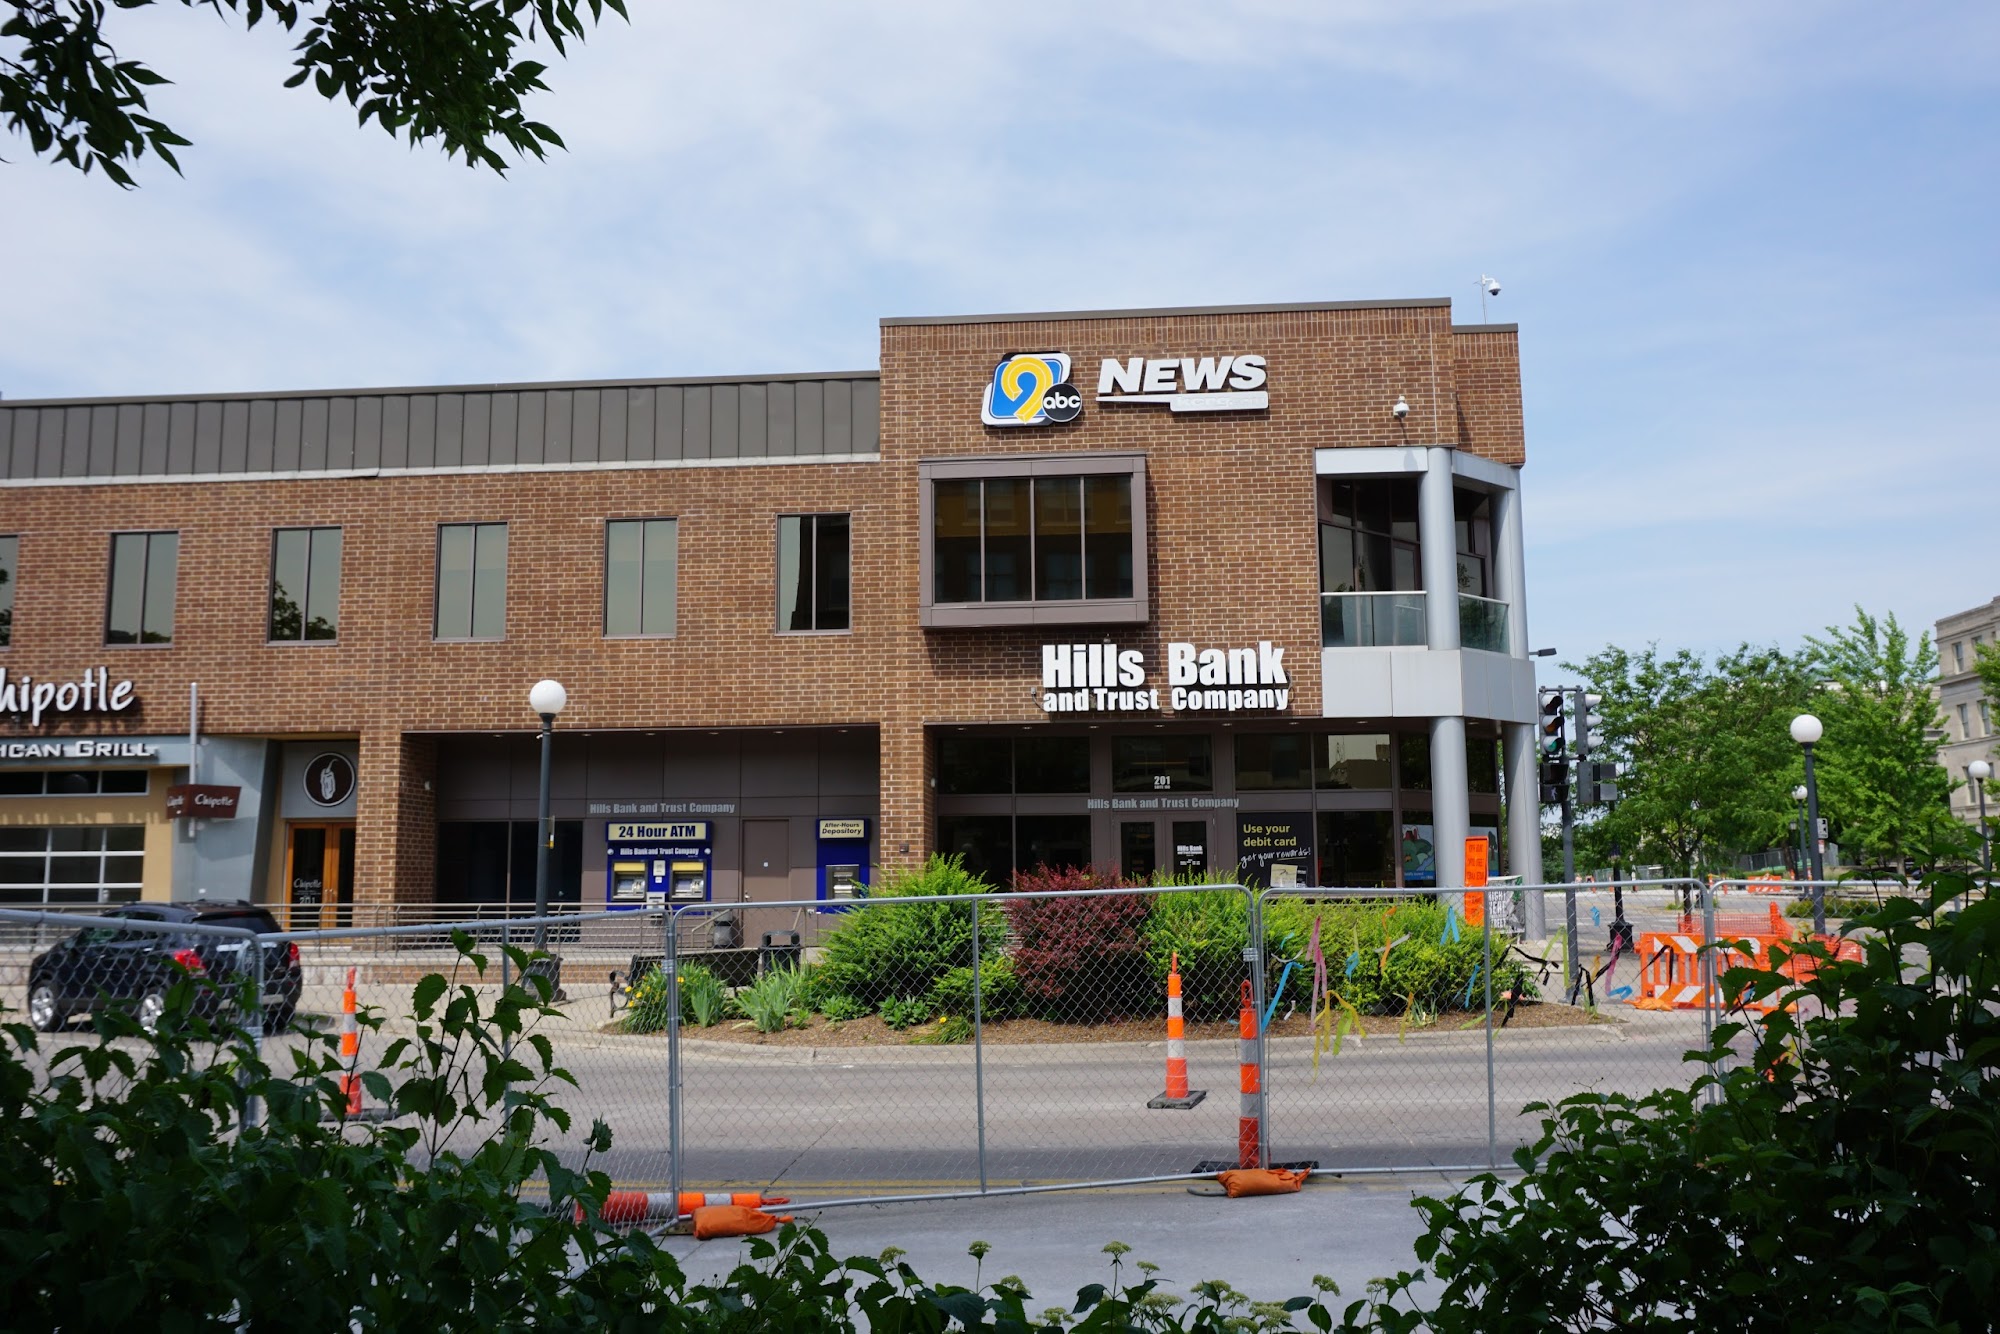 Hills Bank